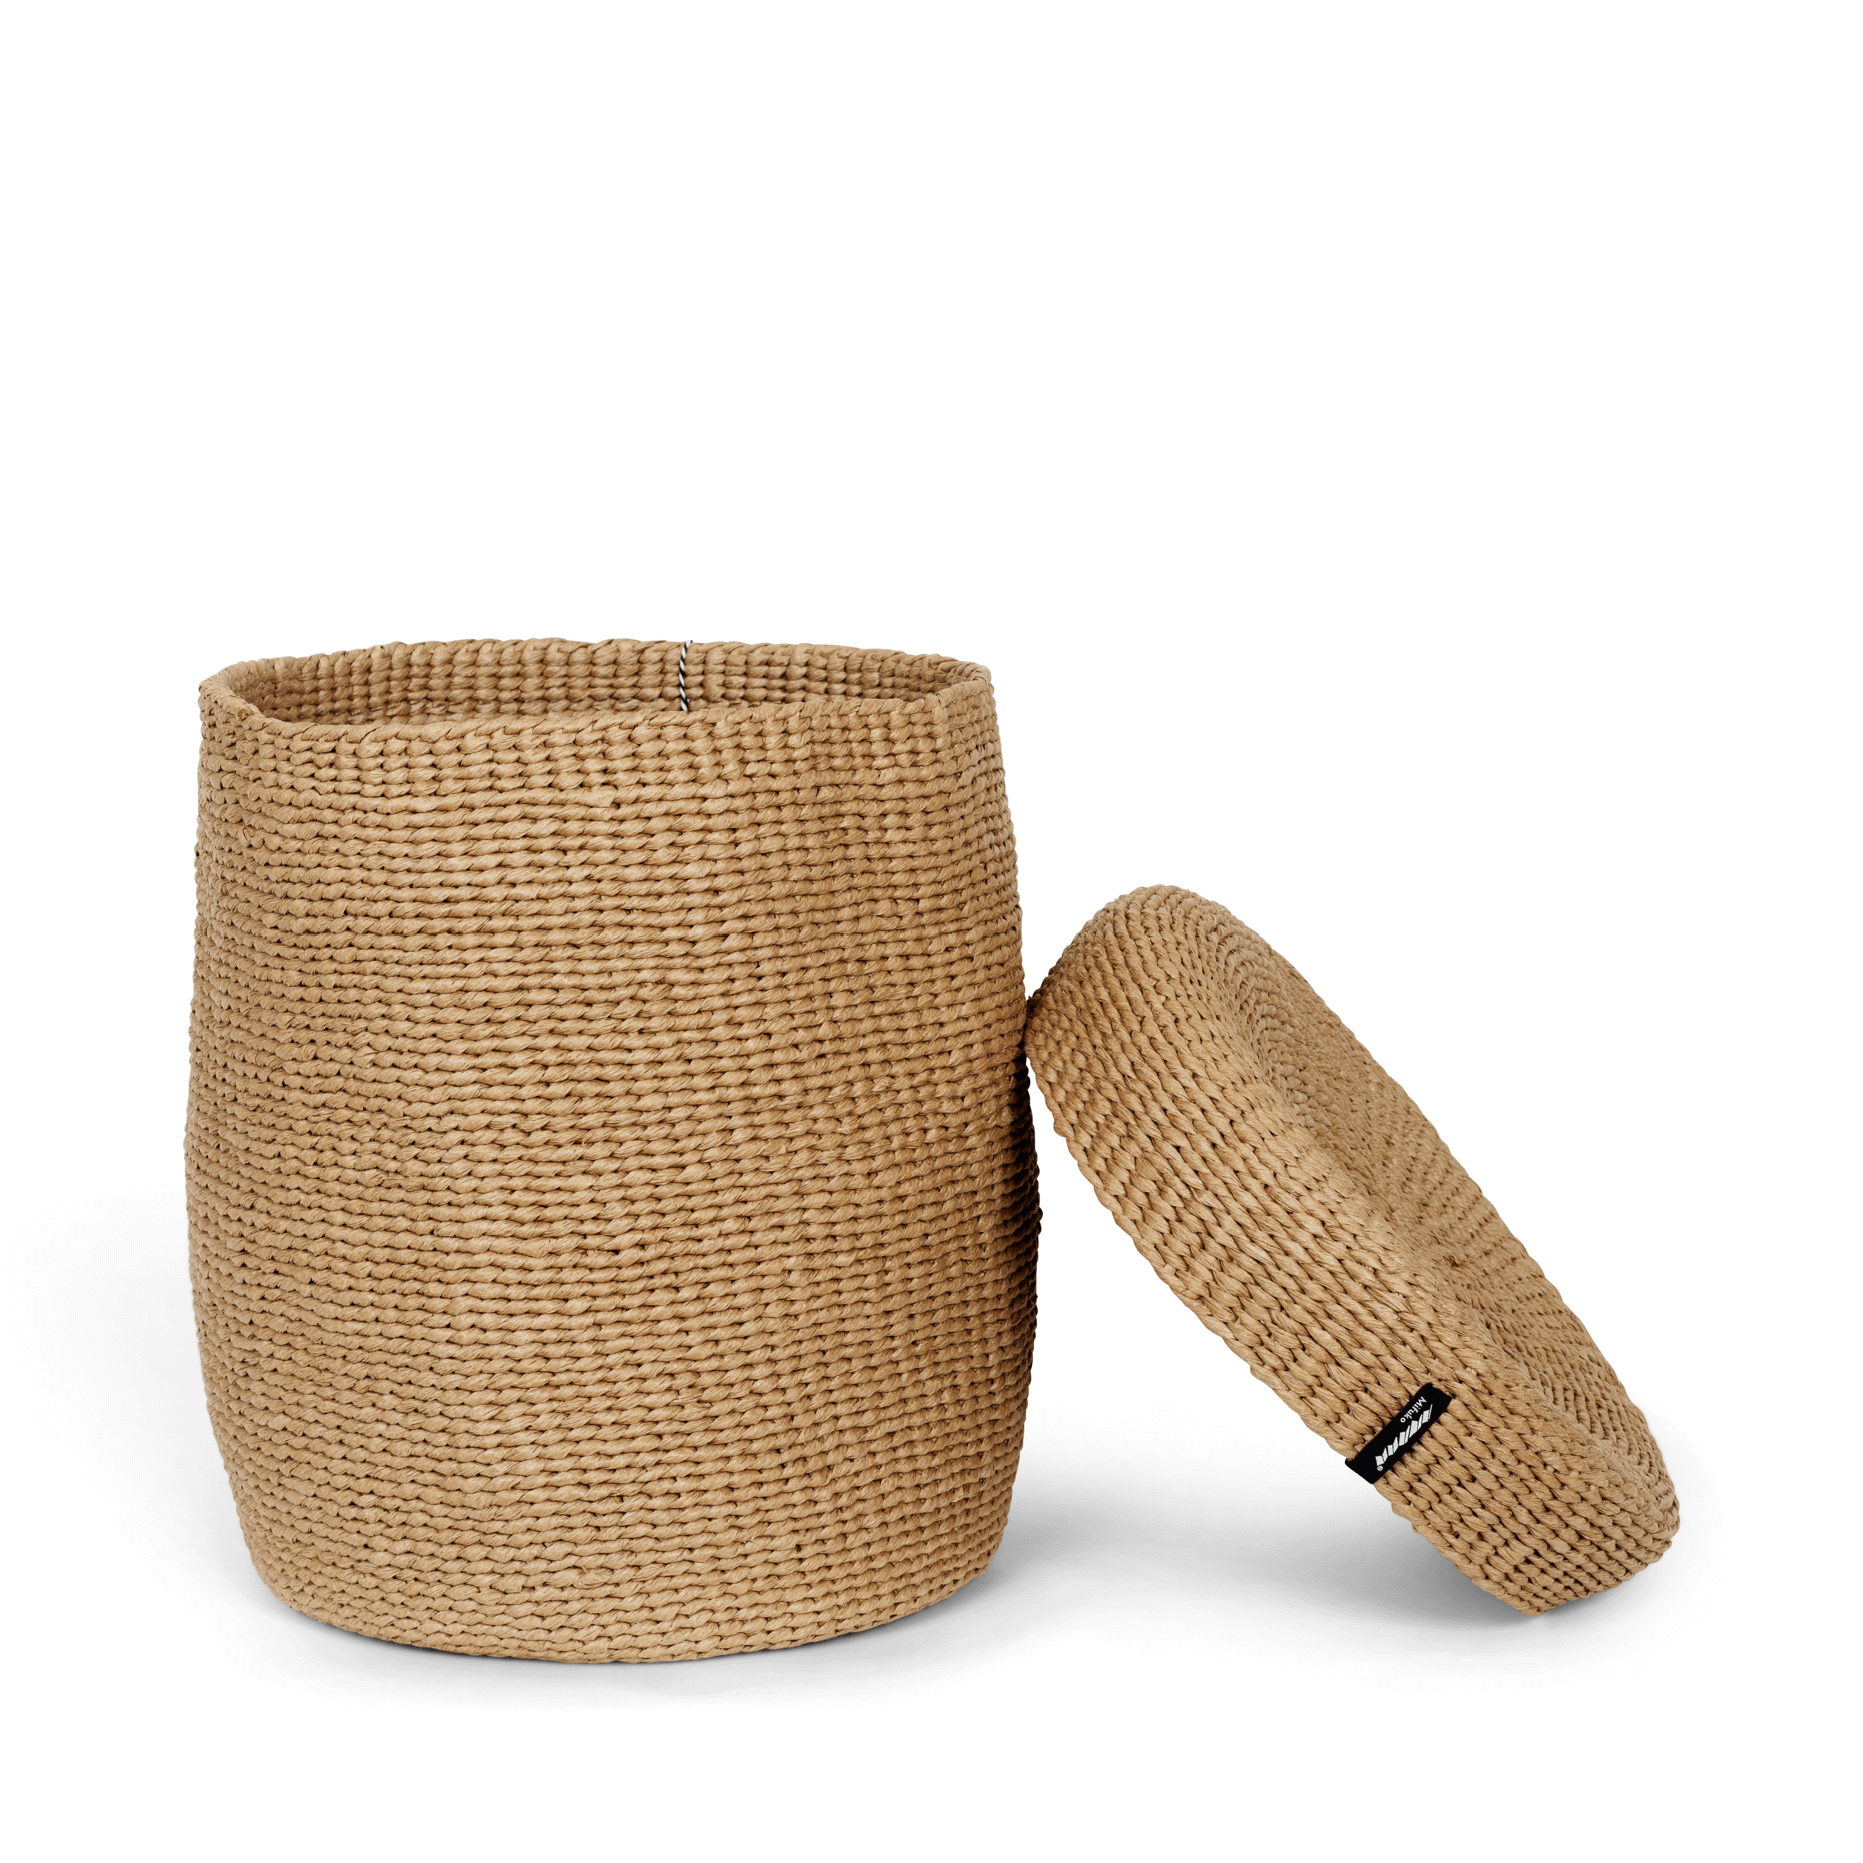 Mifuko Paper Basket with lid S Kiondo basket with lid | Brown L